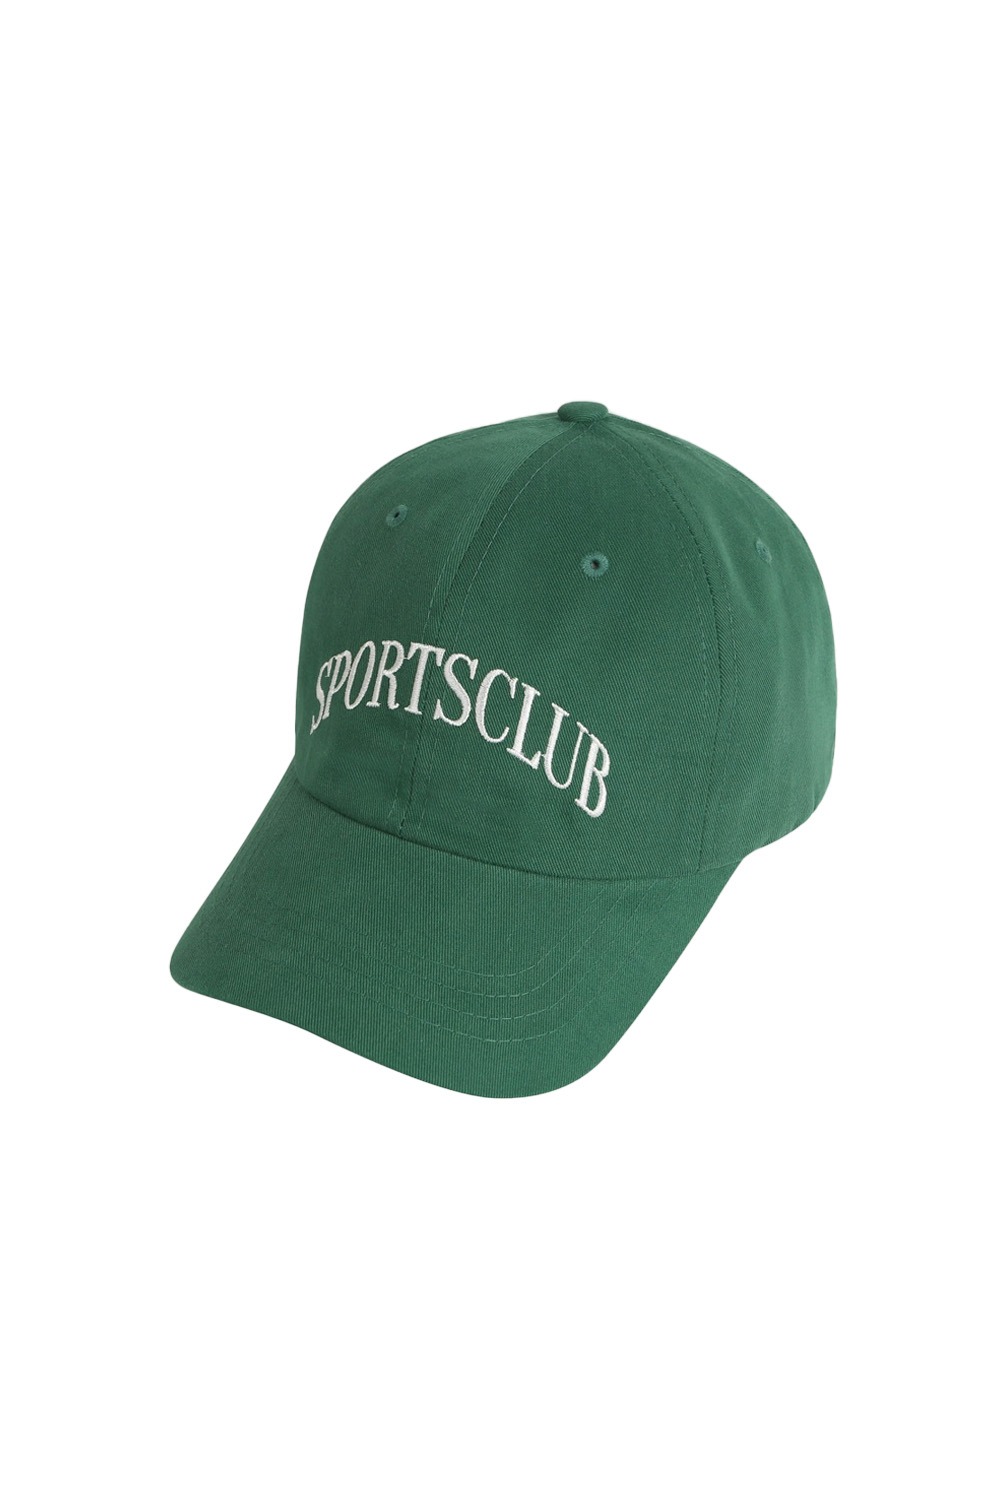 SPORTSCLUB BALL CAP (GREEN) RICHEZ